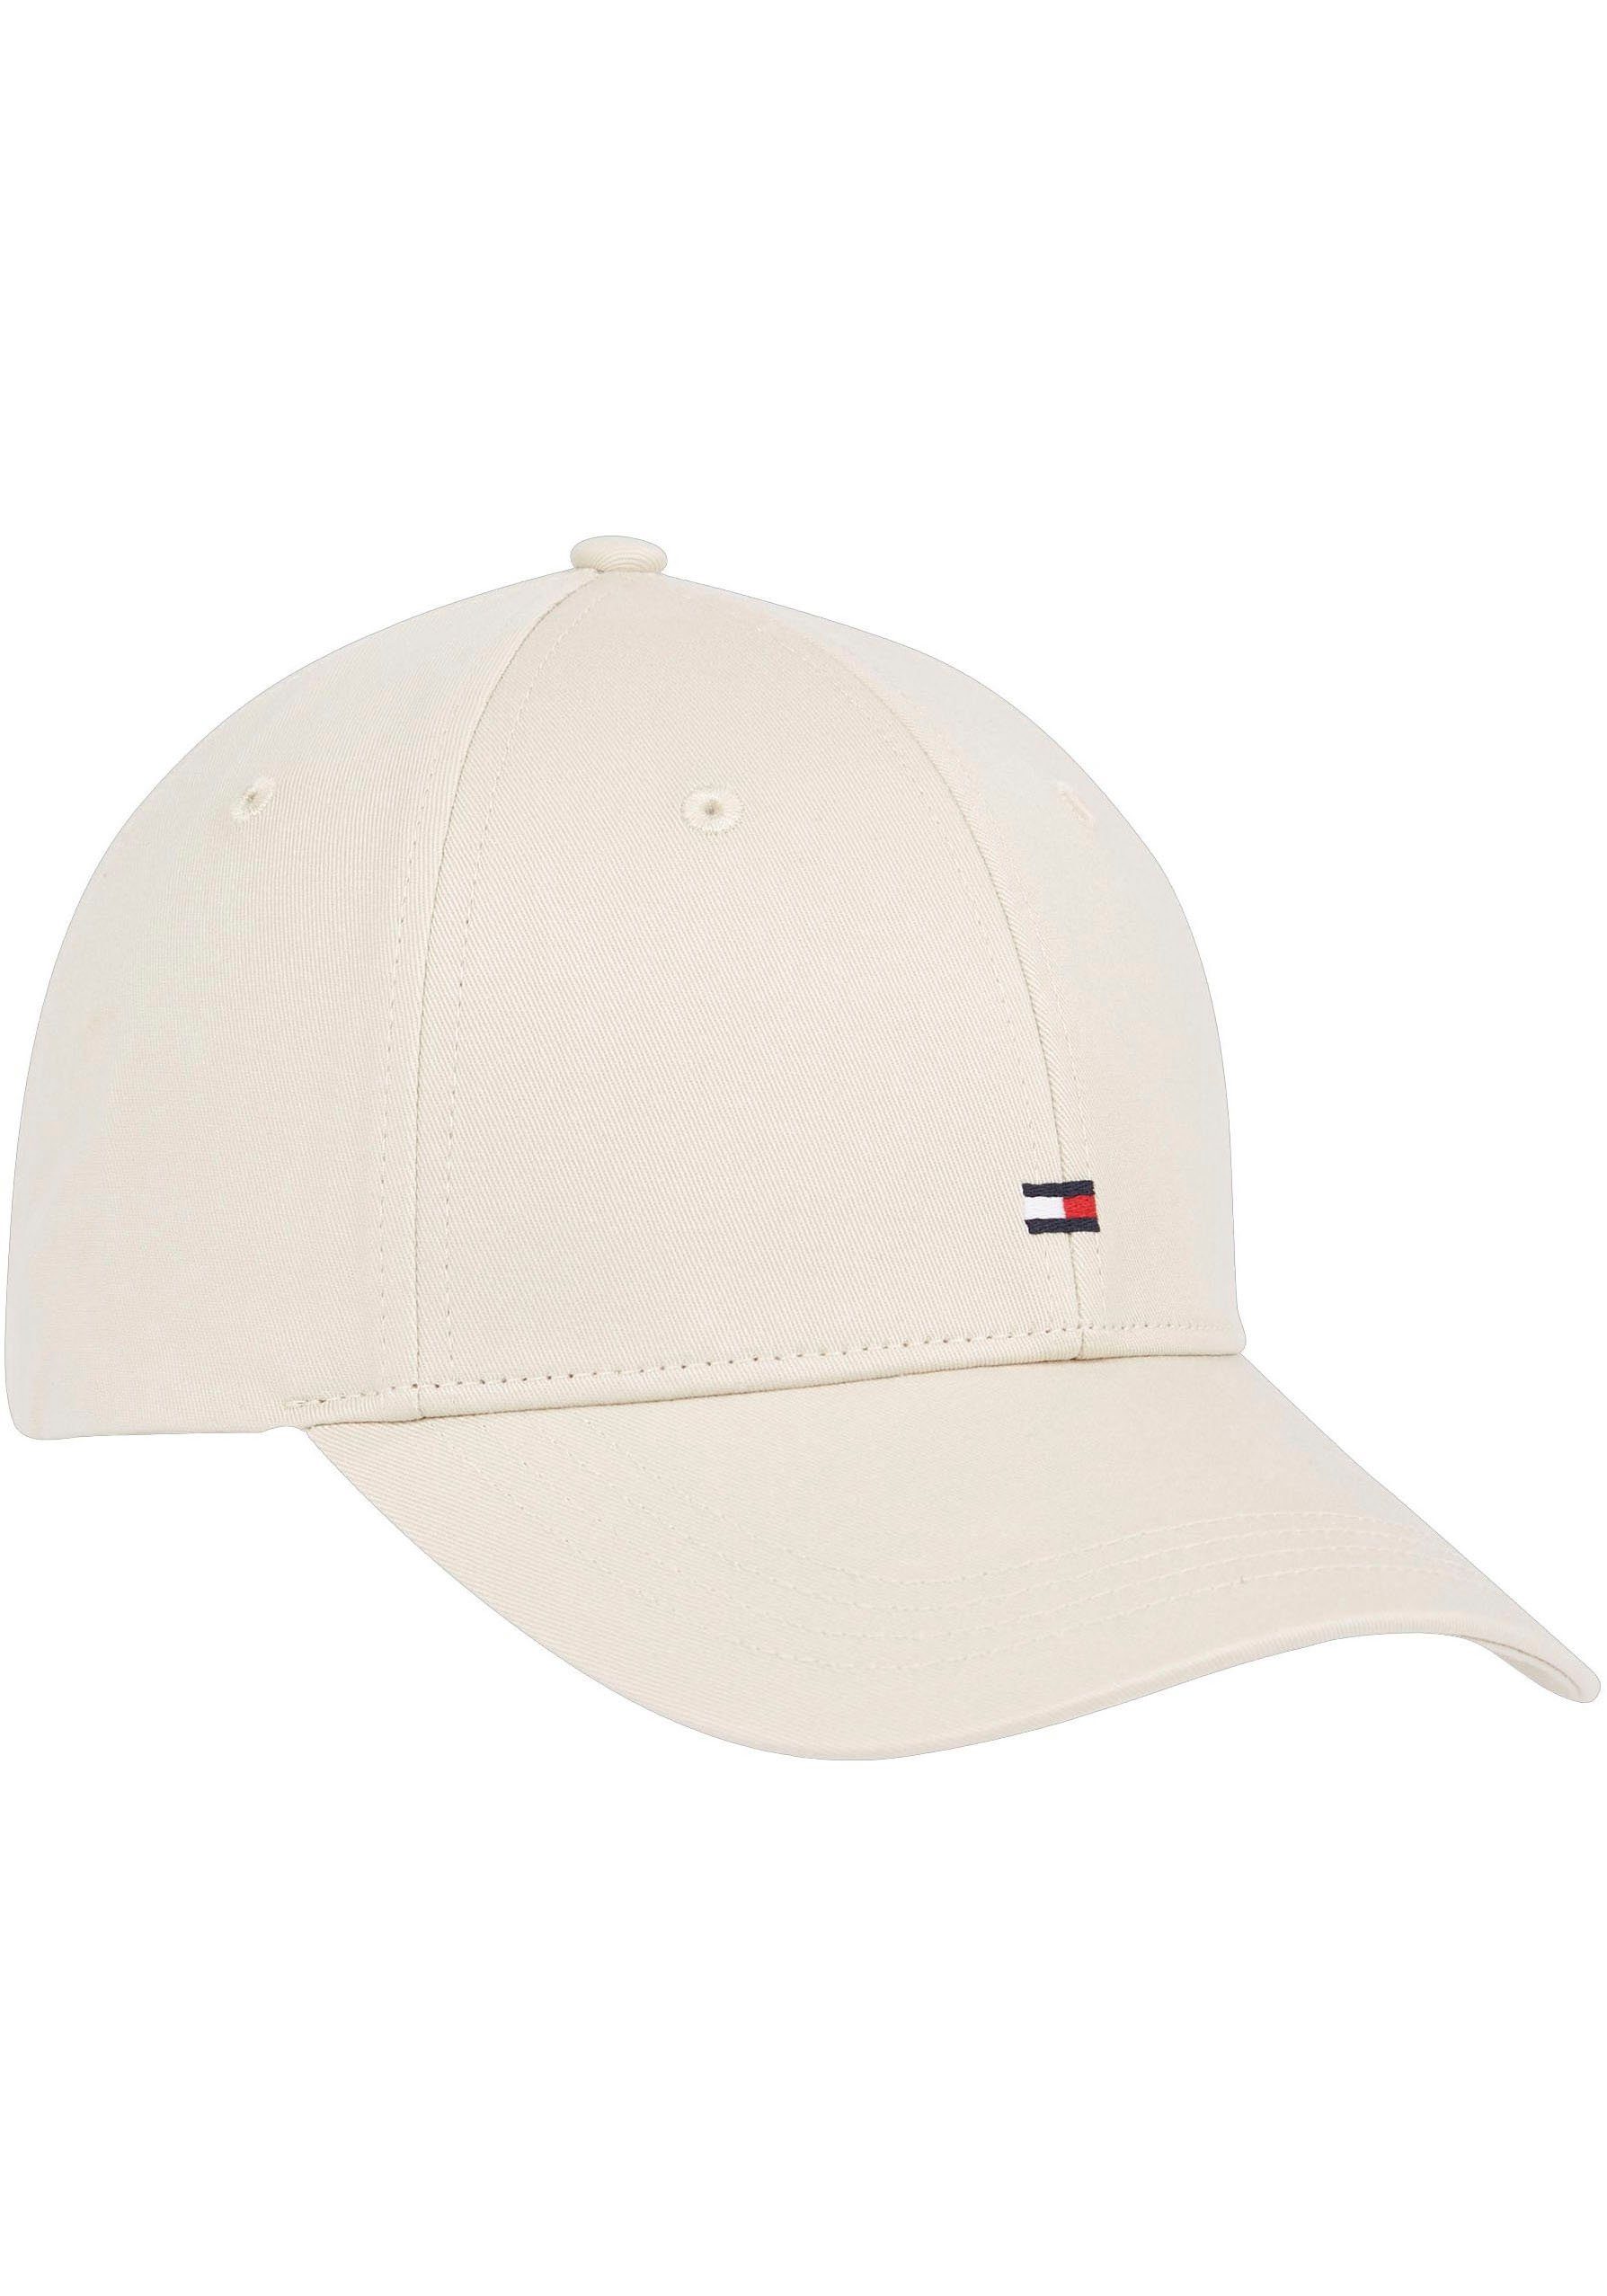 Beige Tommy TH CAP aufgesticktem Hilfiger FLAG Logo-Branding Cap Classic Baseball mit Cap